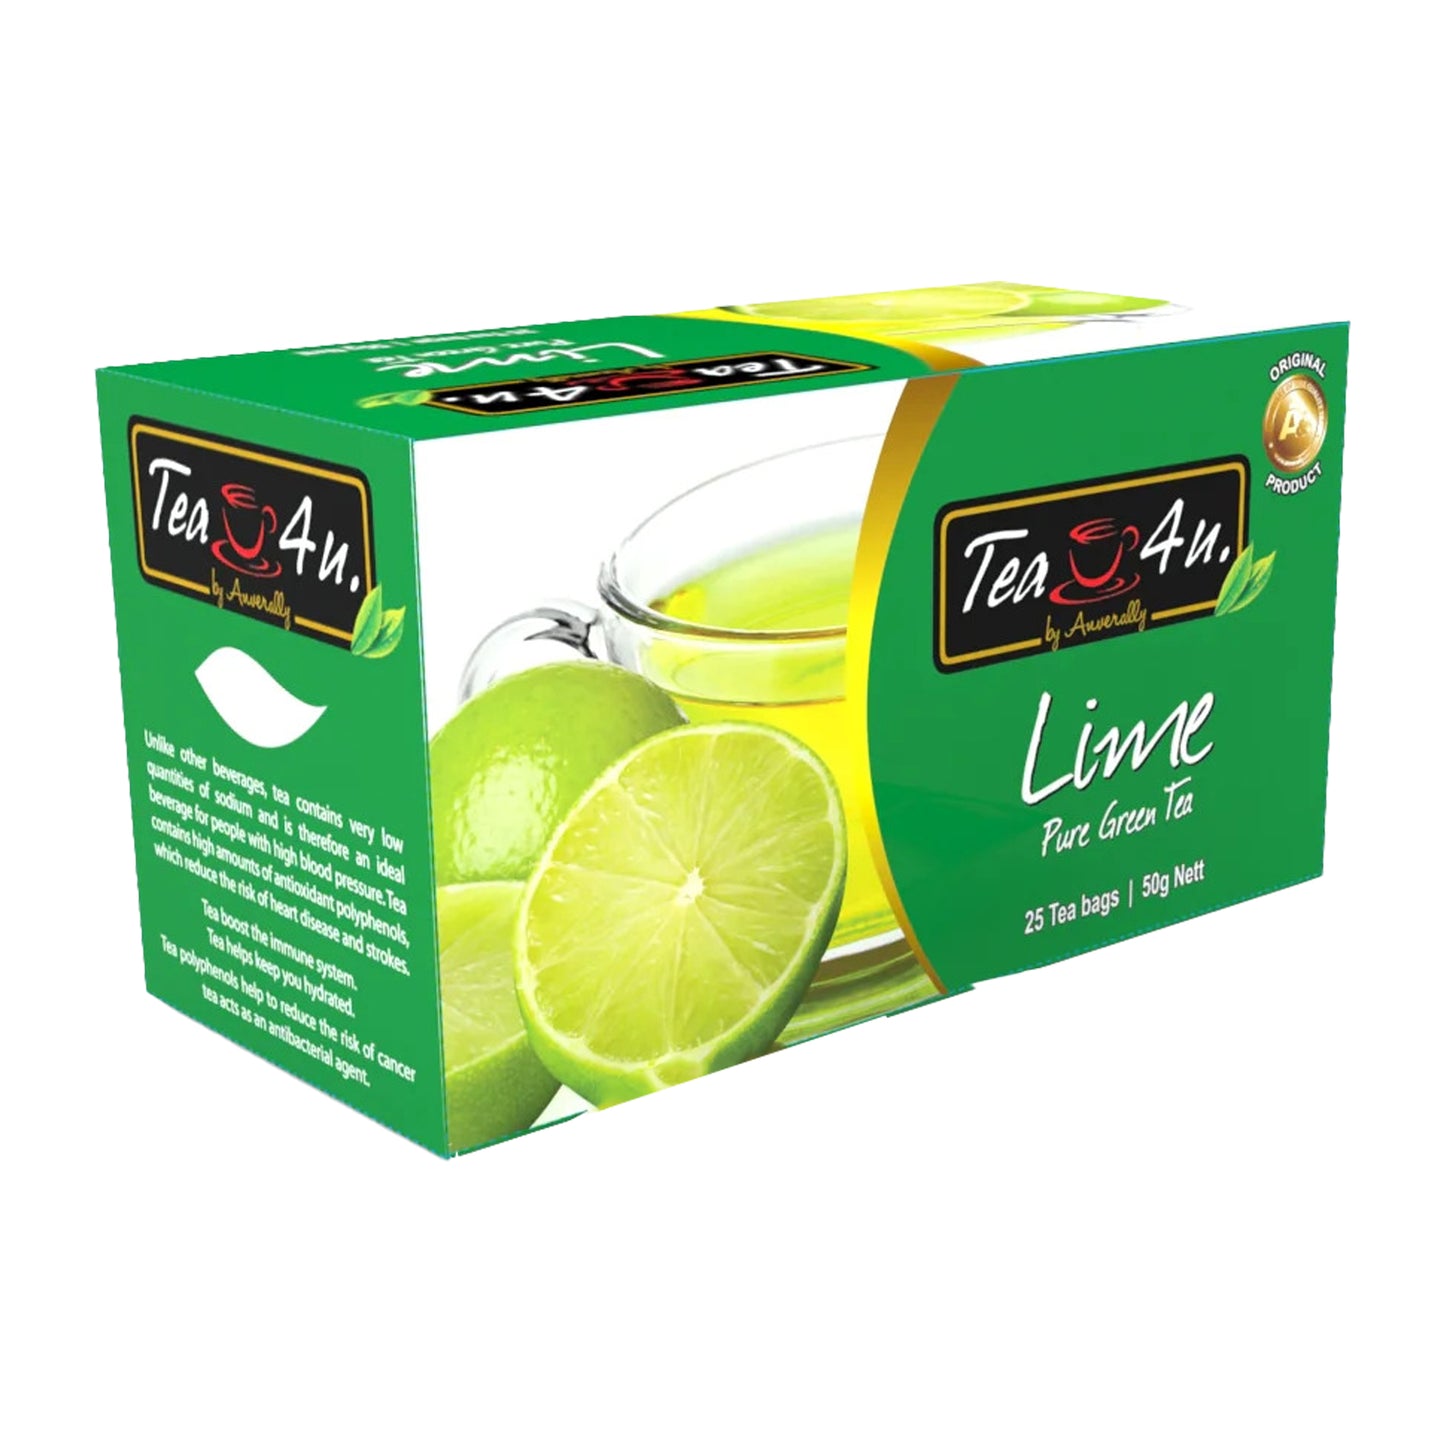 Tea4U Limonkowa zielona herbata (50g) 25 torebek